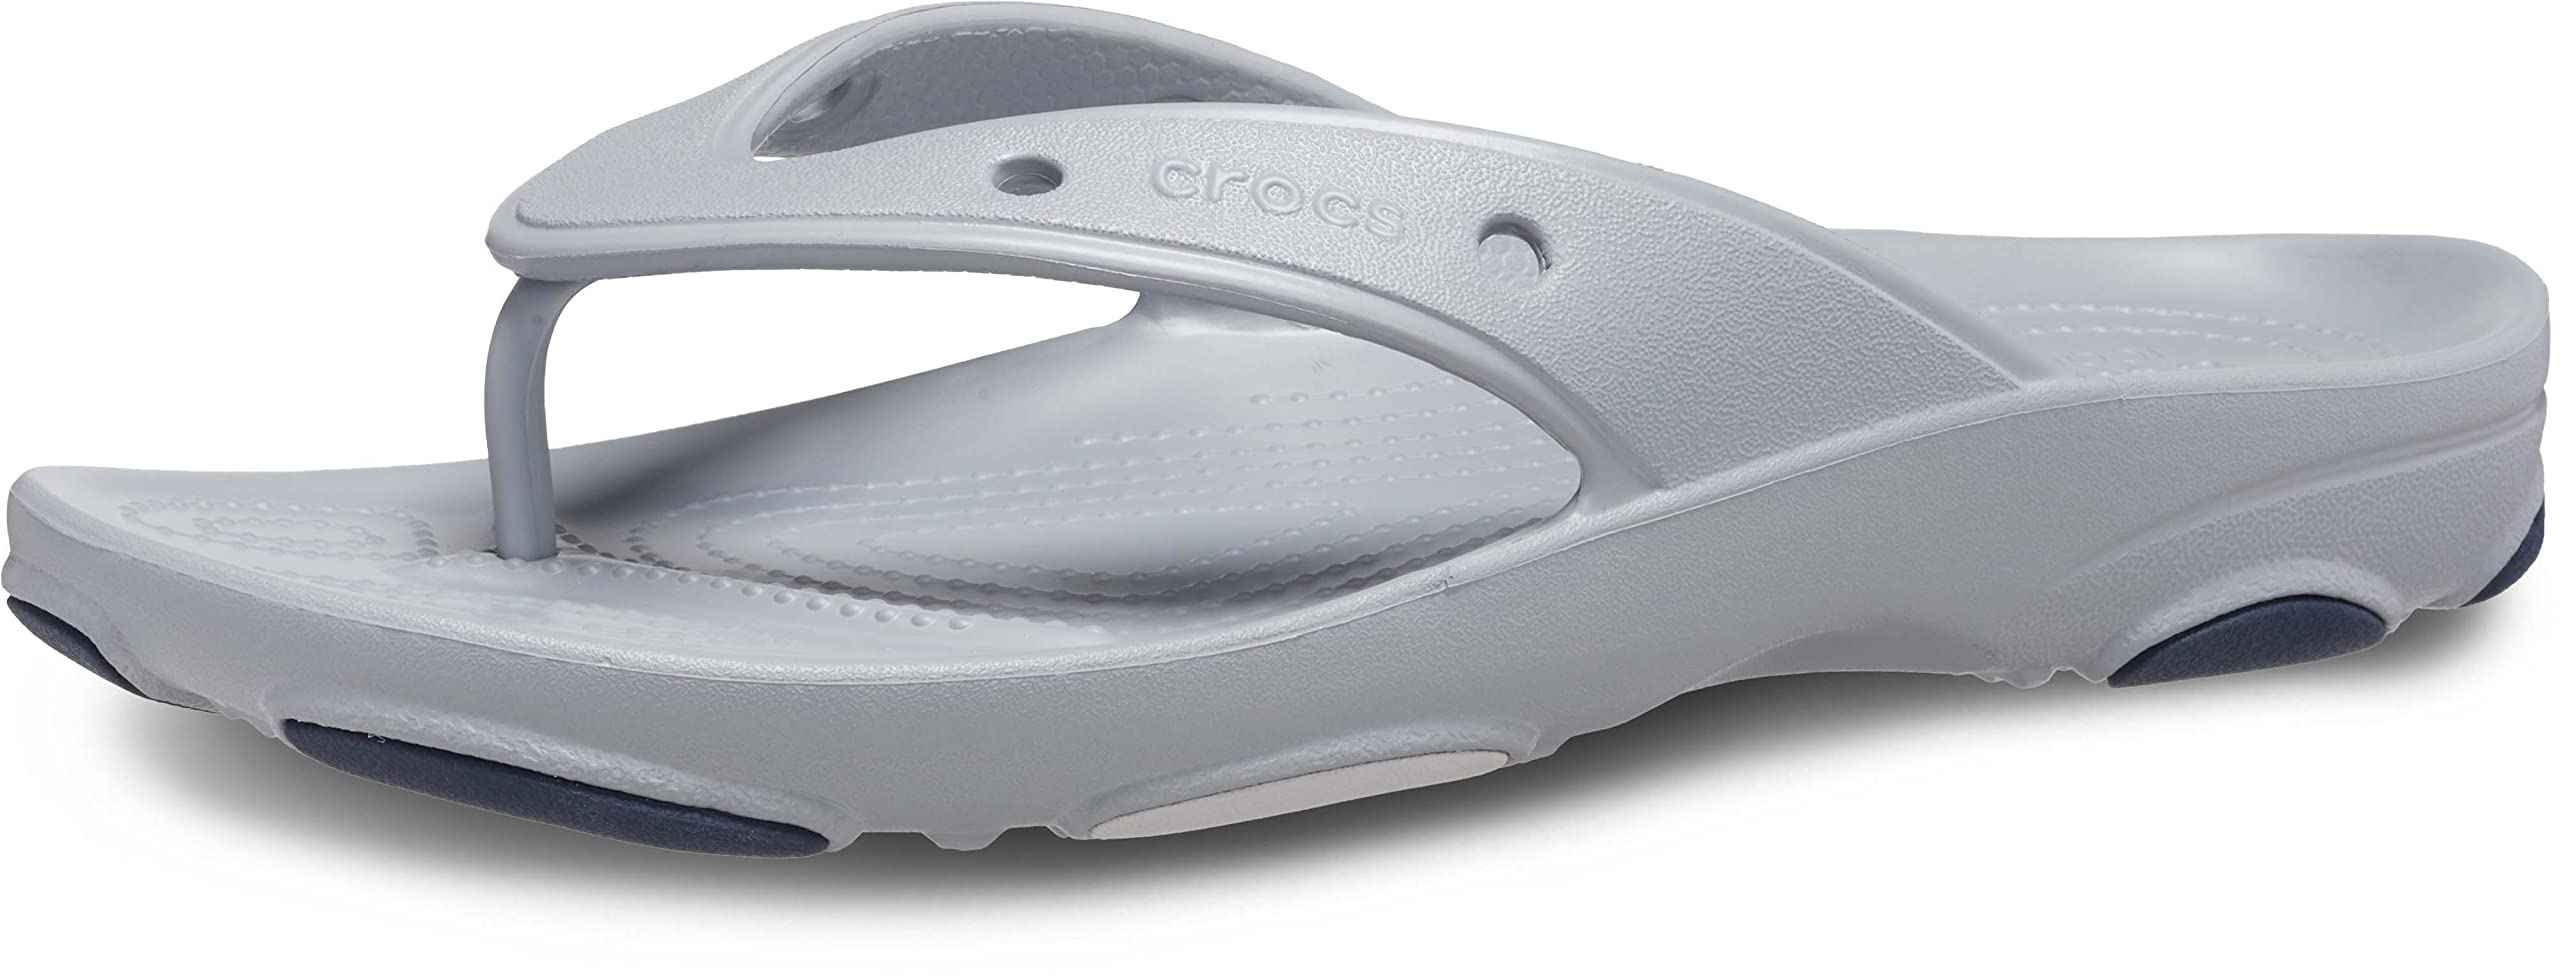 Crocs unisex-adult Classic All Terrain Flip Flops